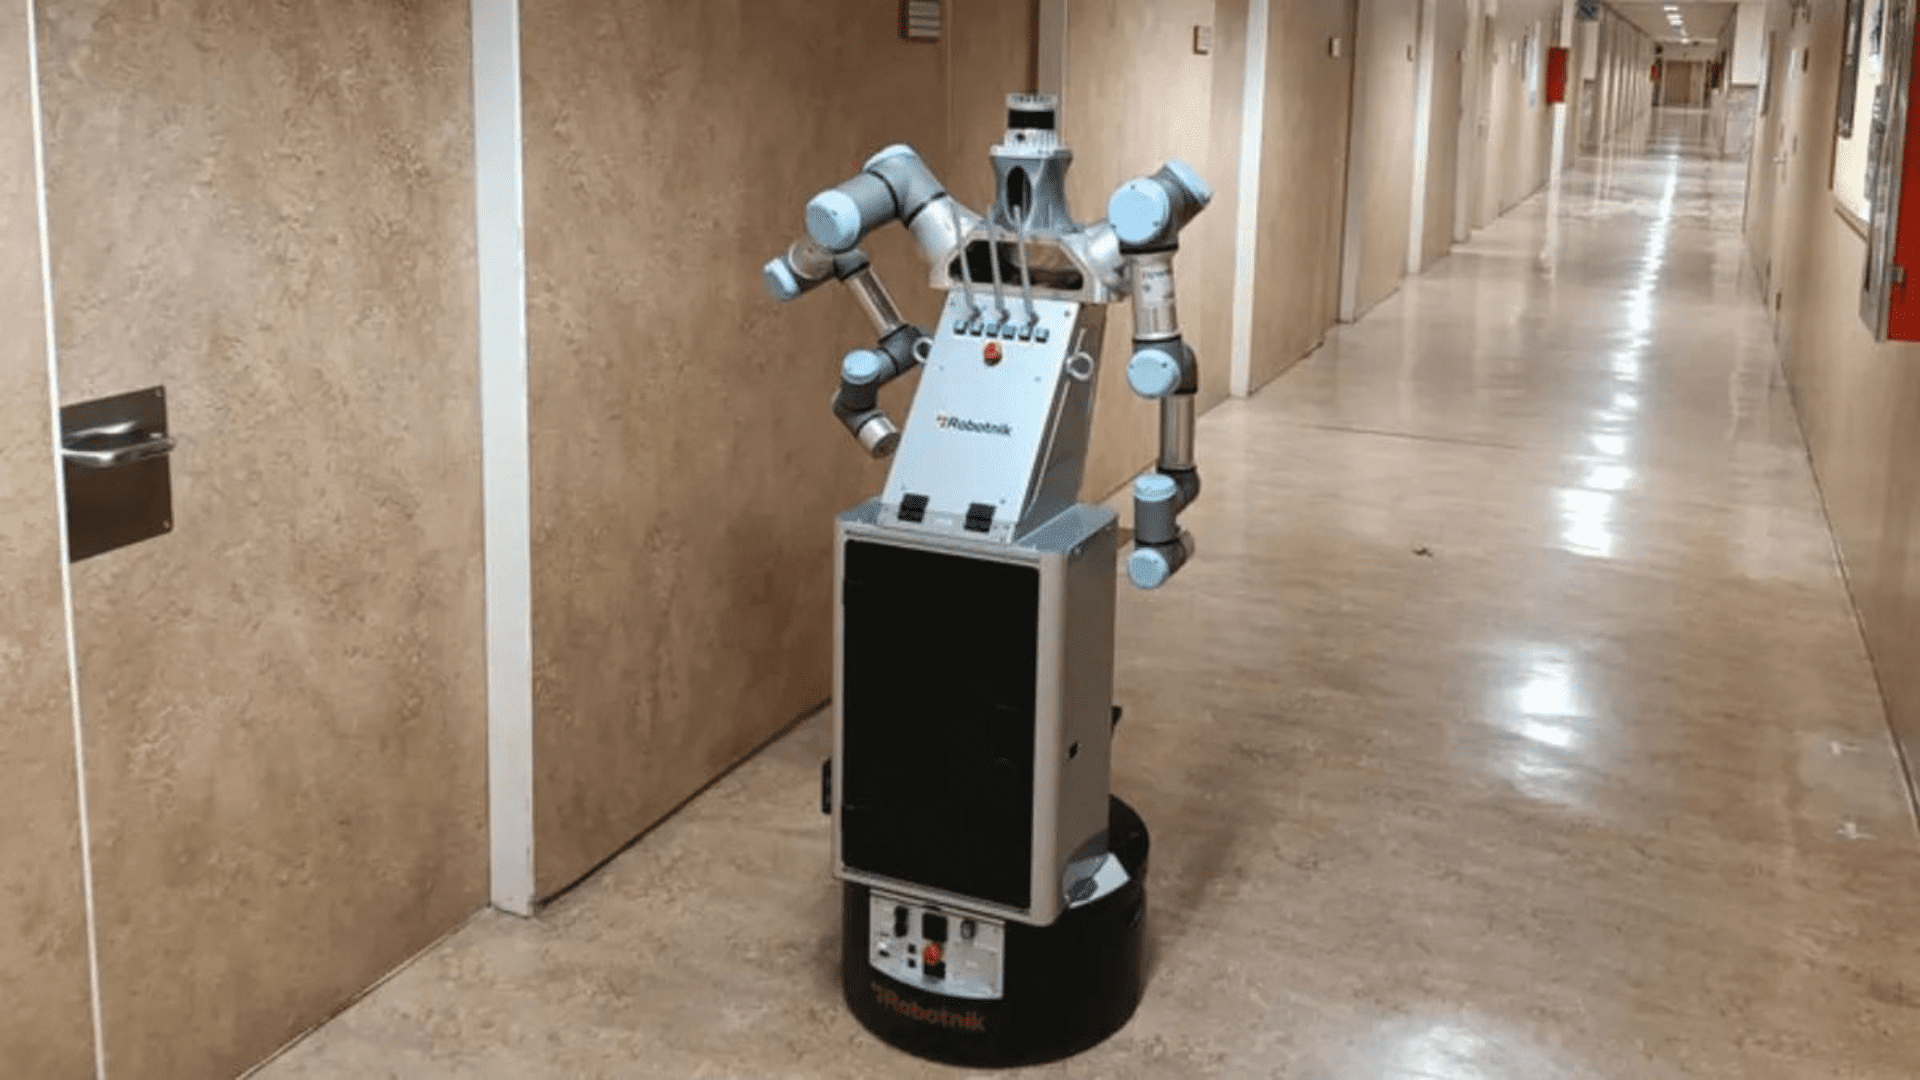 Robotic assistant for elderly 